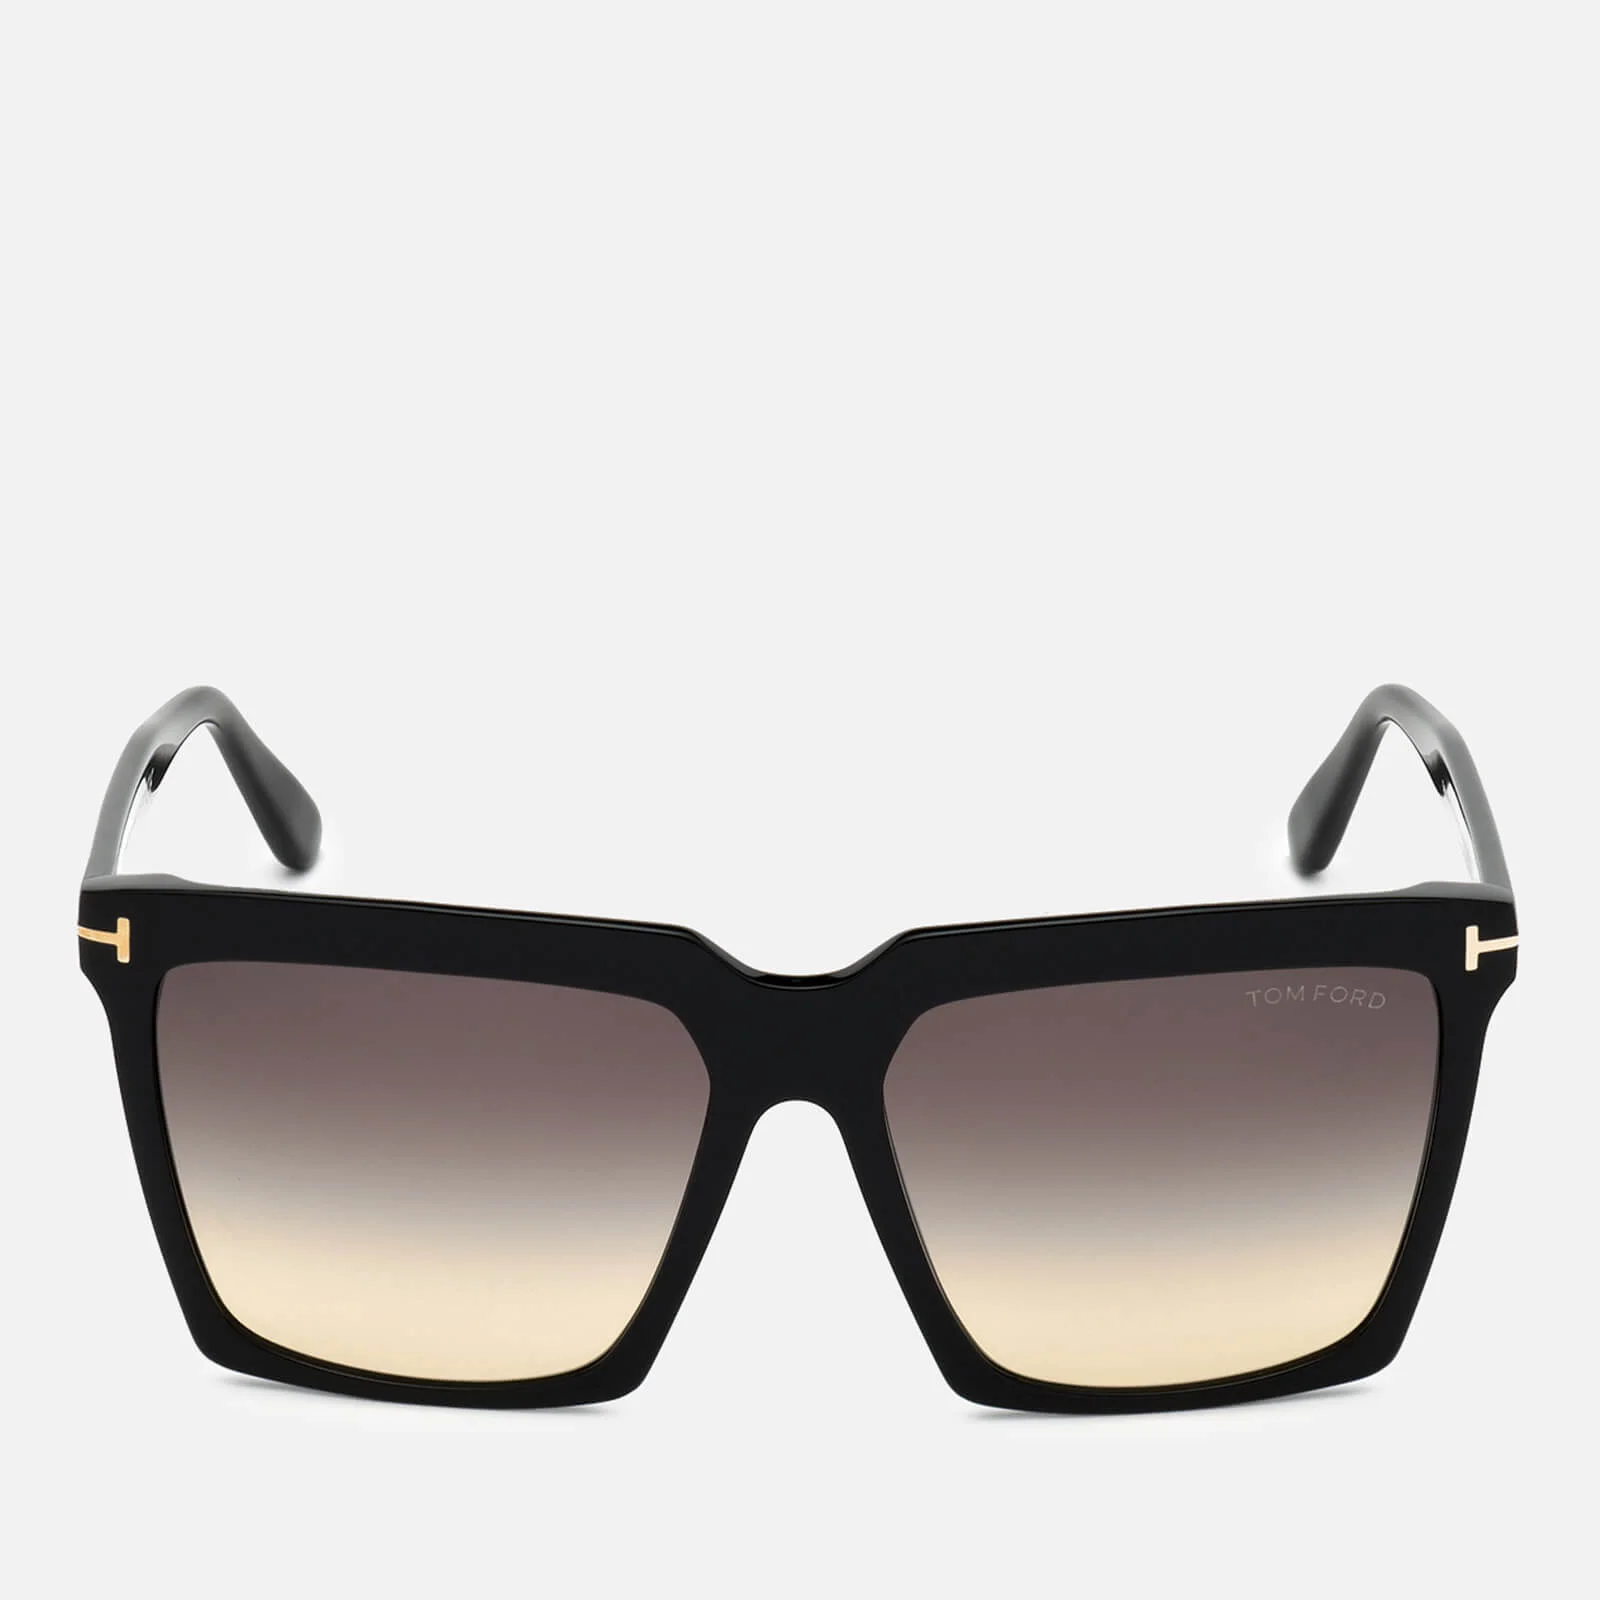 Tom Ford Women's Oversized Square Frame Sunglasses - Black/Smoke Image 1